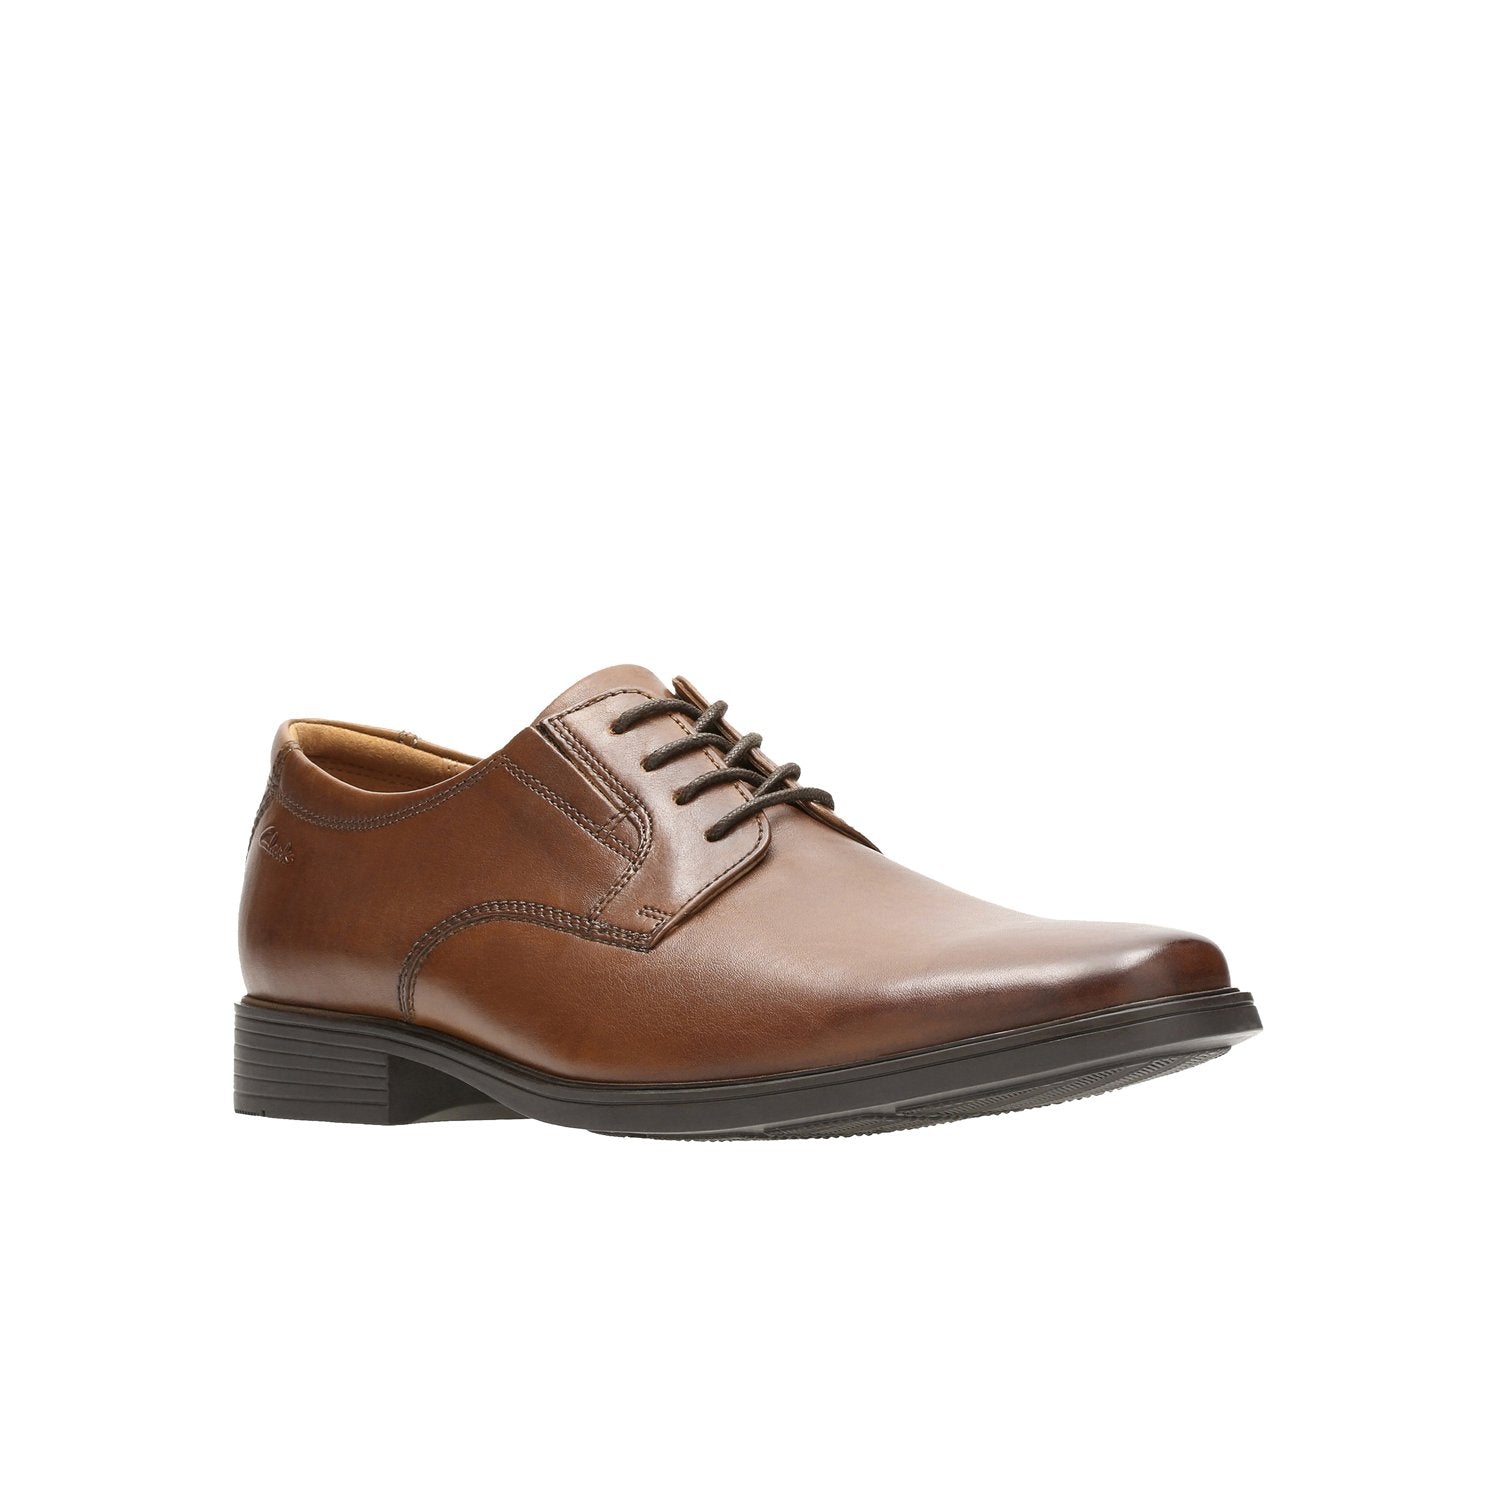 Clarks-Tilden-Plain-Men's-Shoes-Dark-Tan-Lea-26130097